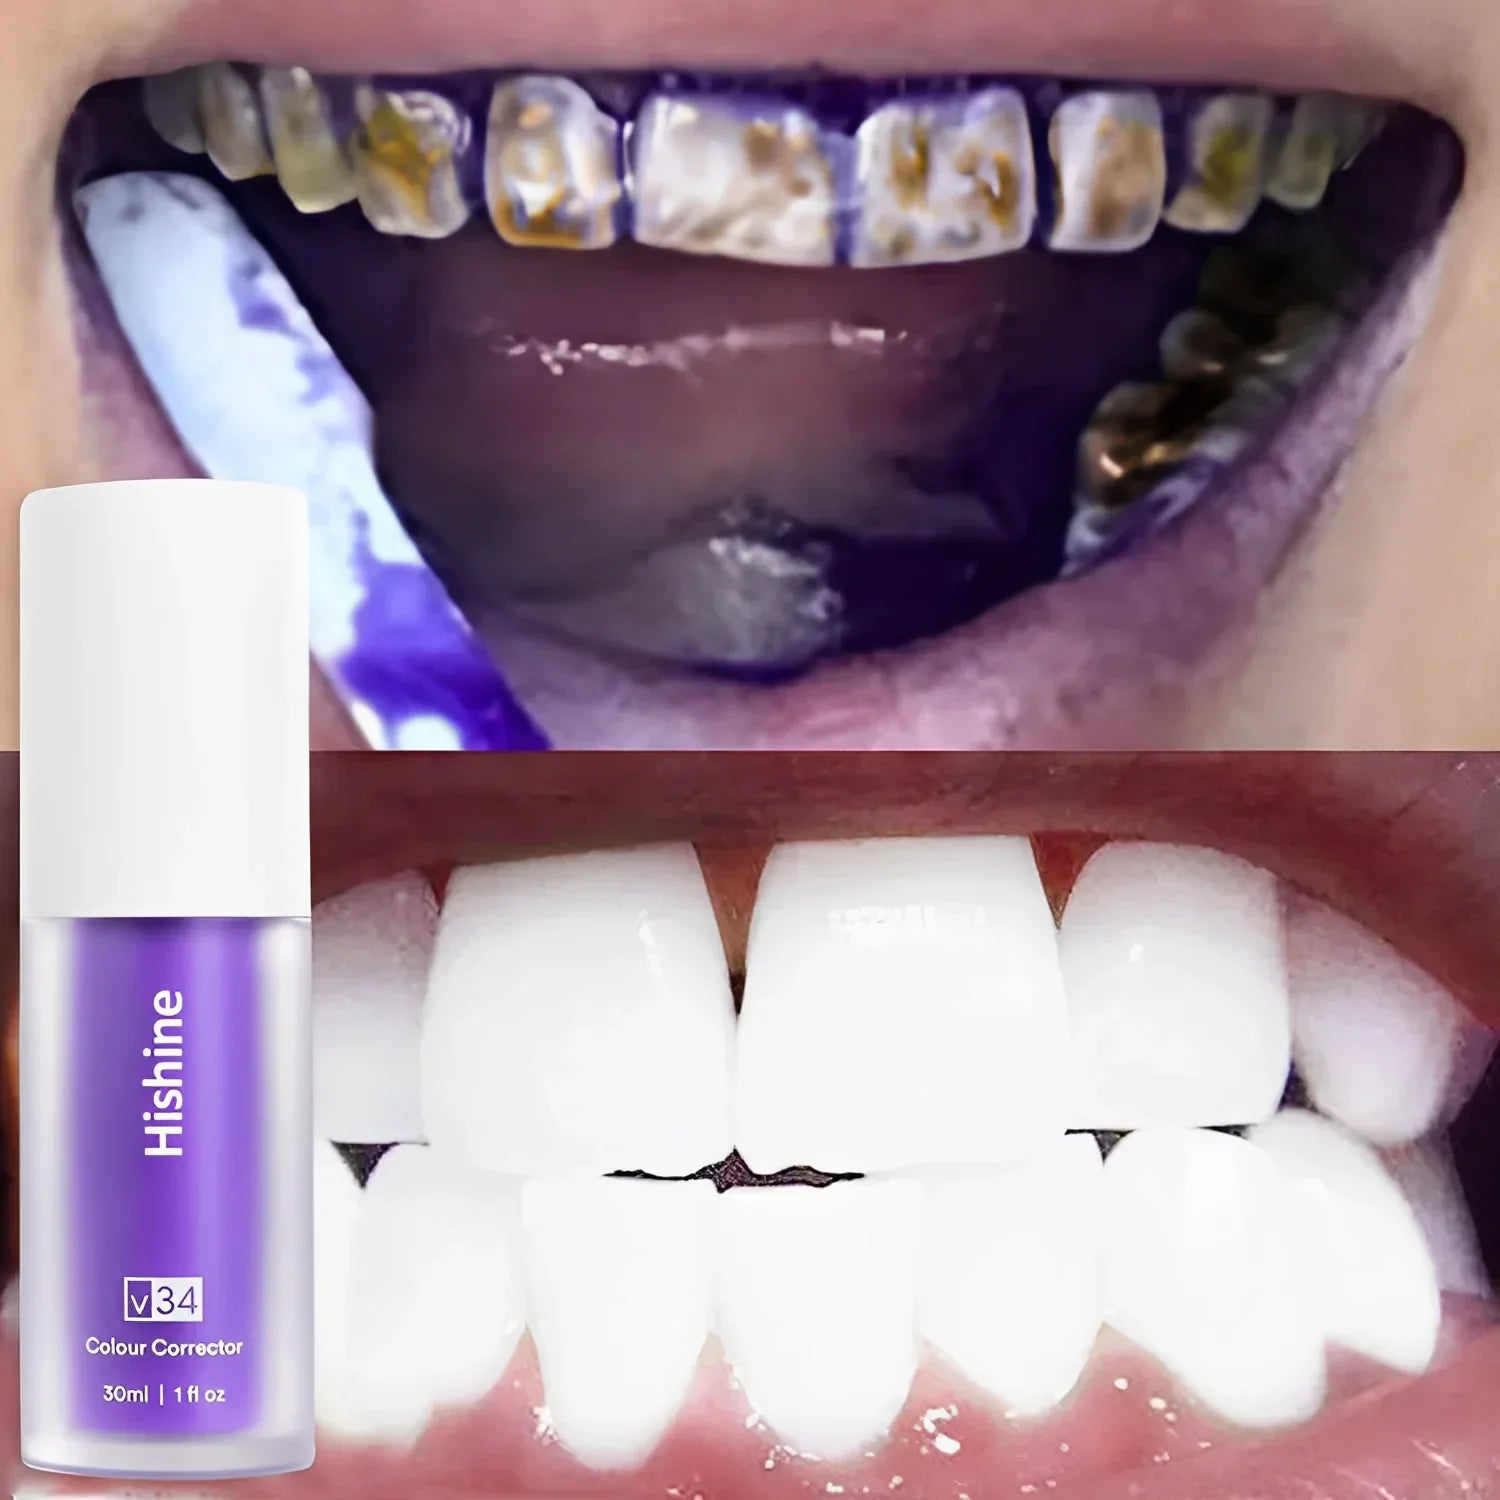 Hishine™ Pure Herbal Teeth Whitening Mousse - flowerence